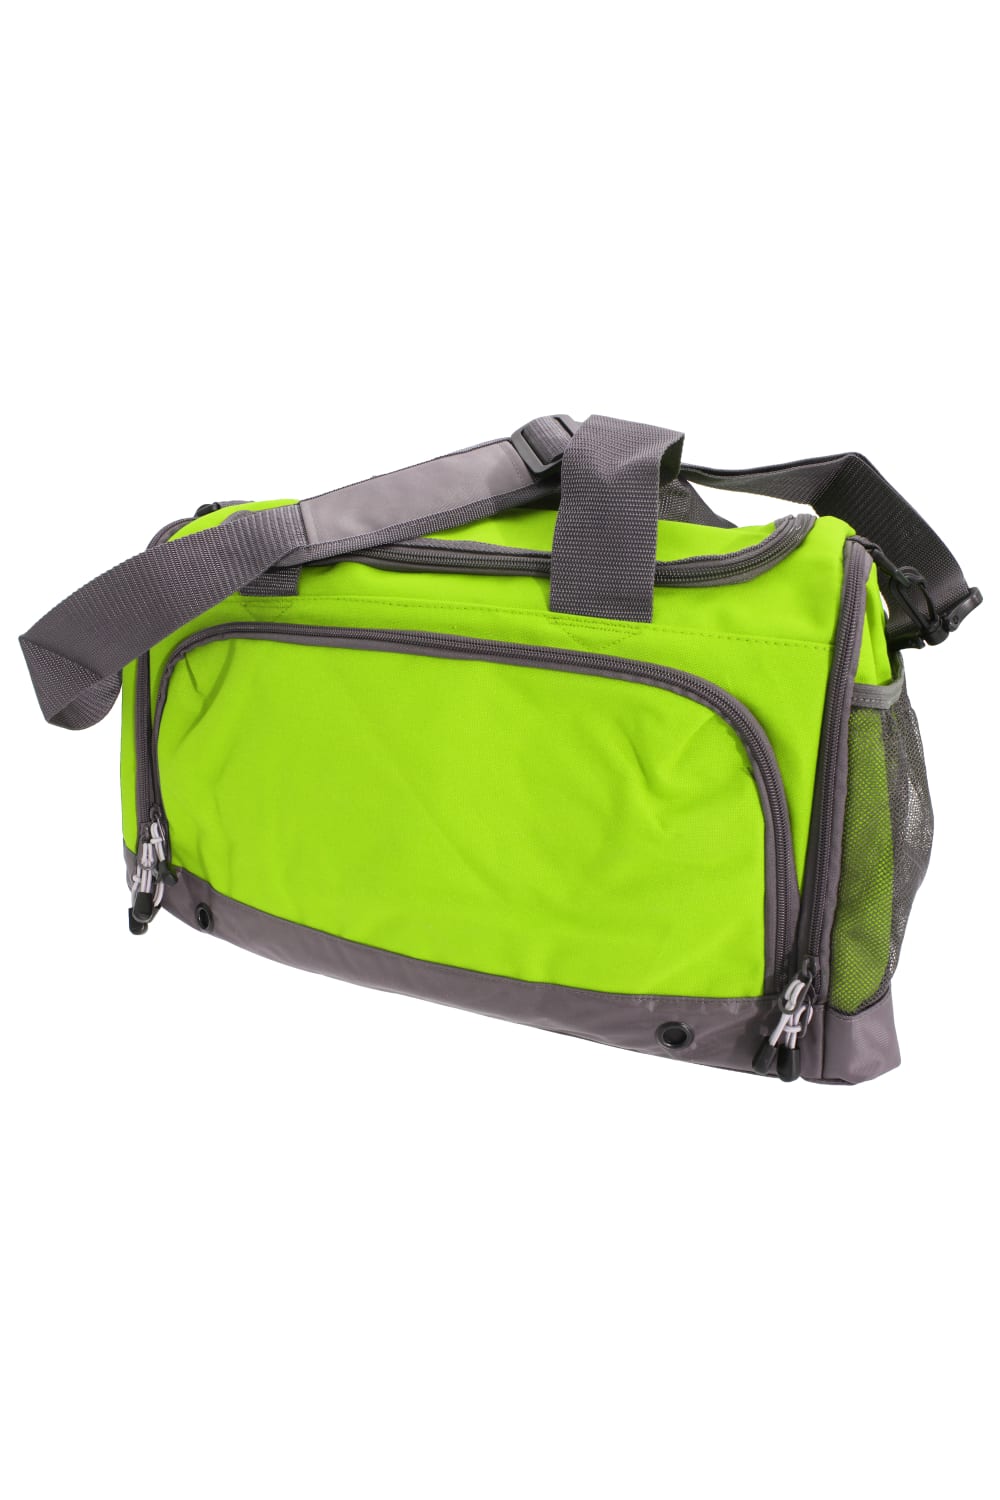 BagBase Sports Holdall / Duffel Bag (Lime Green) (One Size)